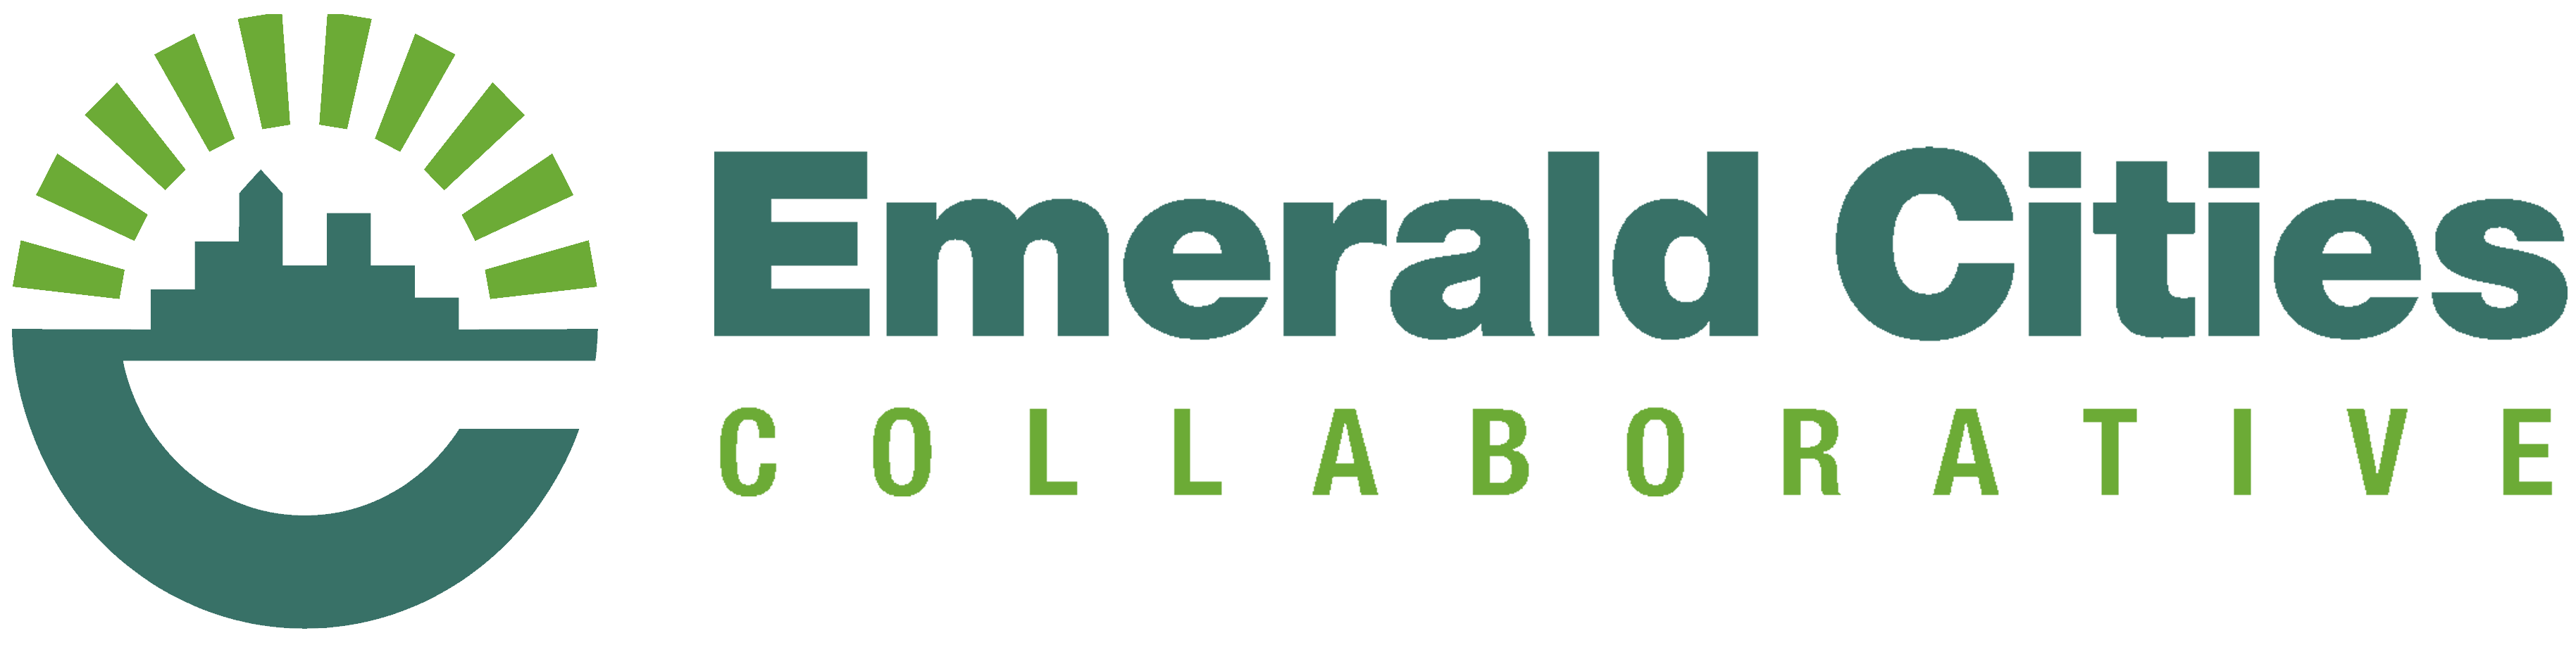 Emerald Cities Collaborative Logo